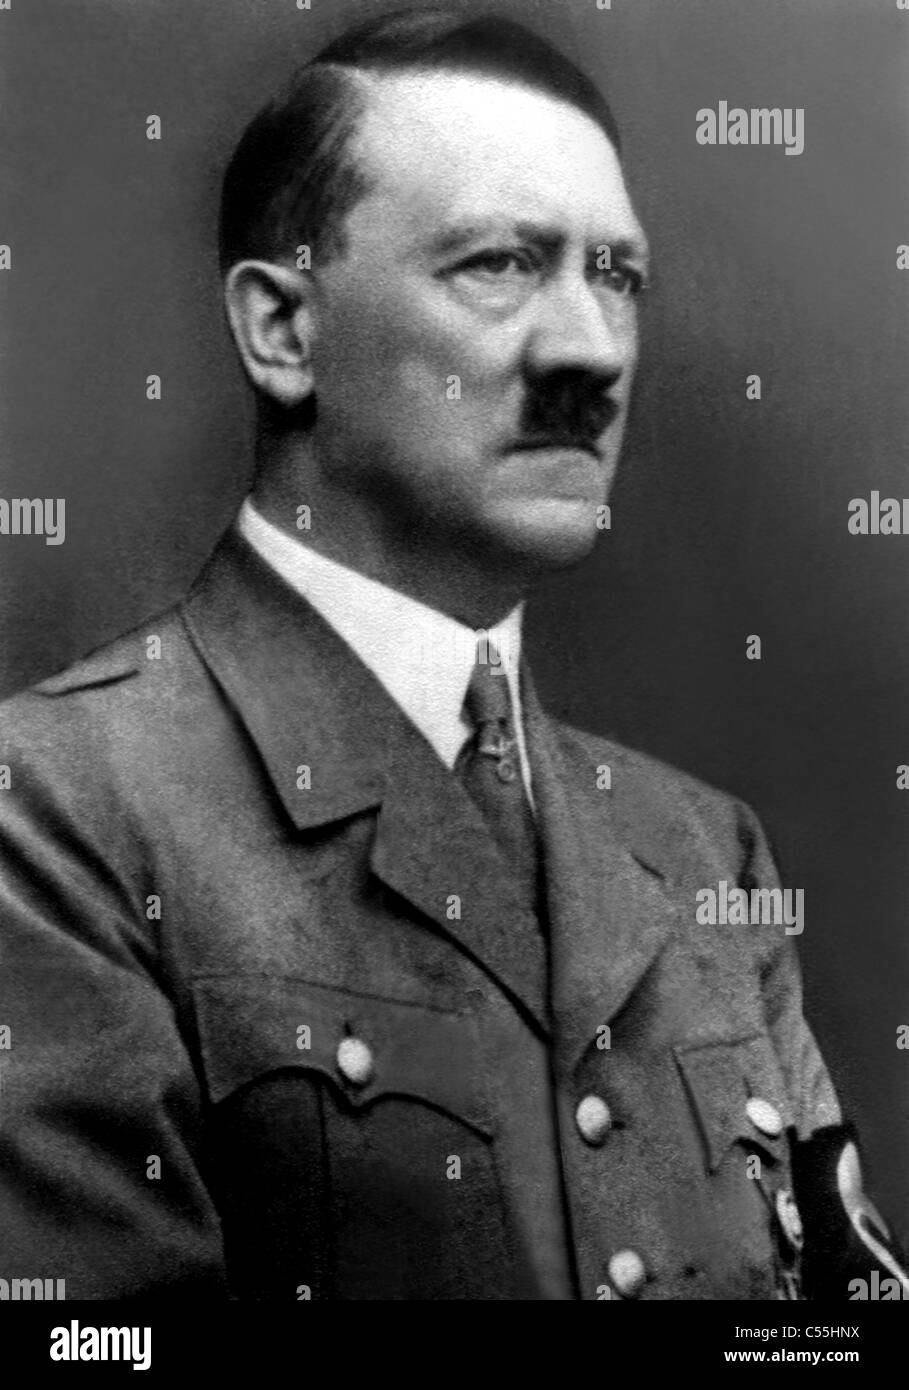 ADOLF HITLER FUHRER OF GERMANY NAZI LEADER 01 May 1940 Stock Photo